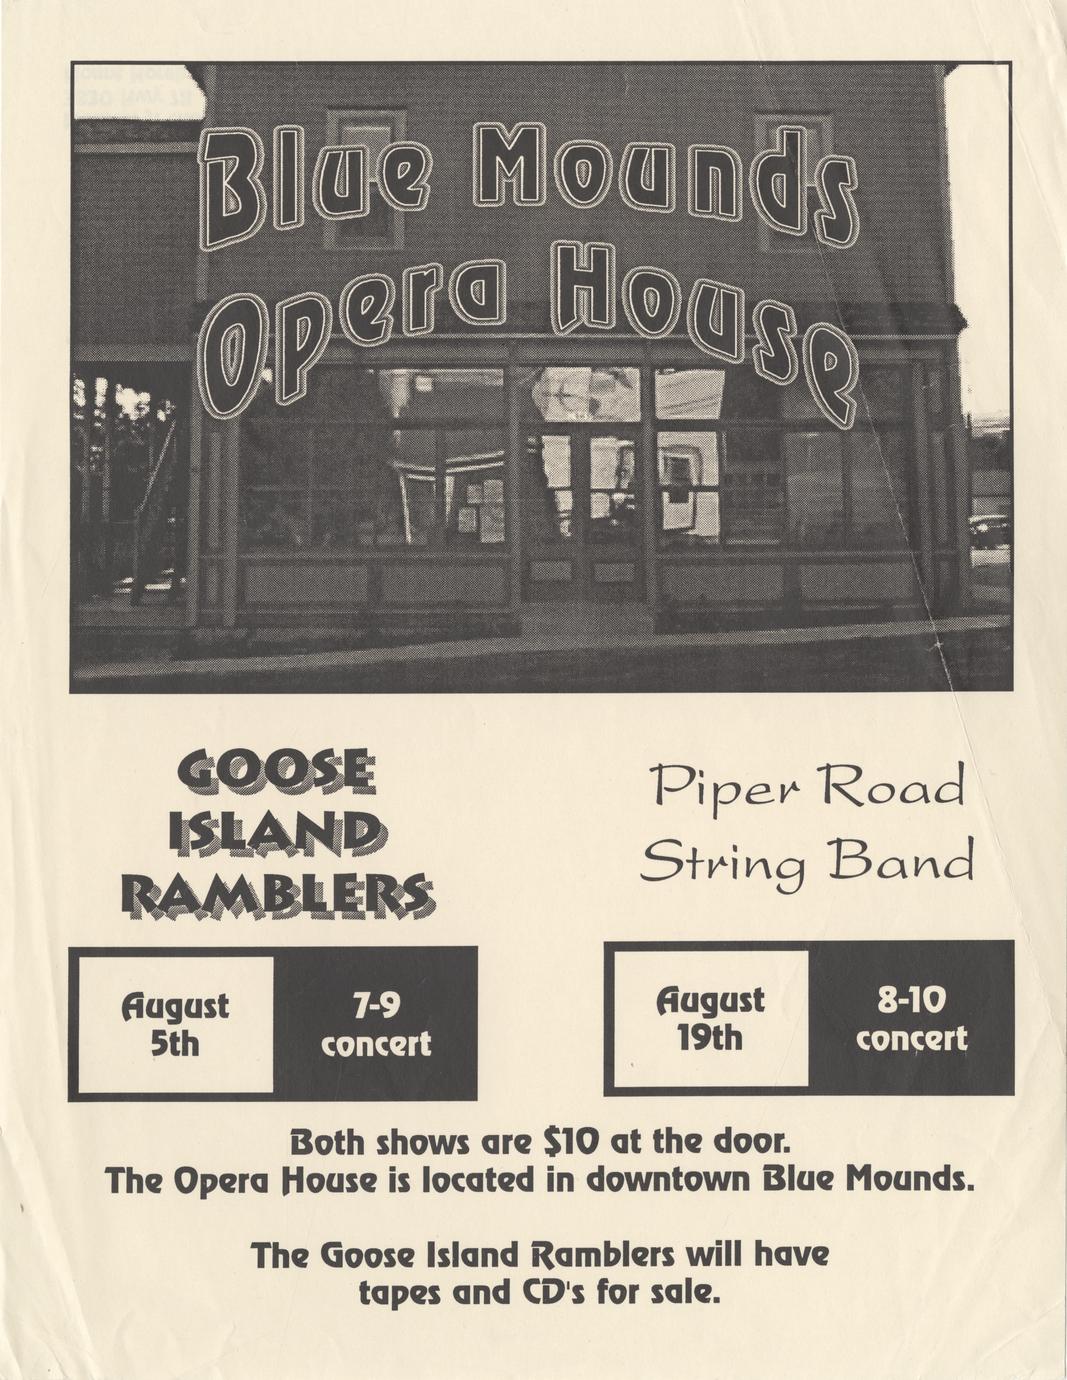 Goose Island Ramblers concert poster